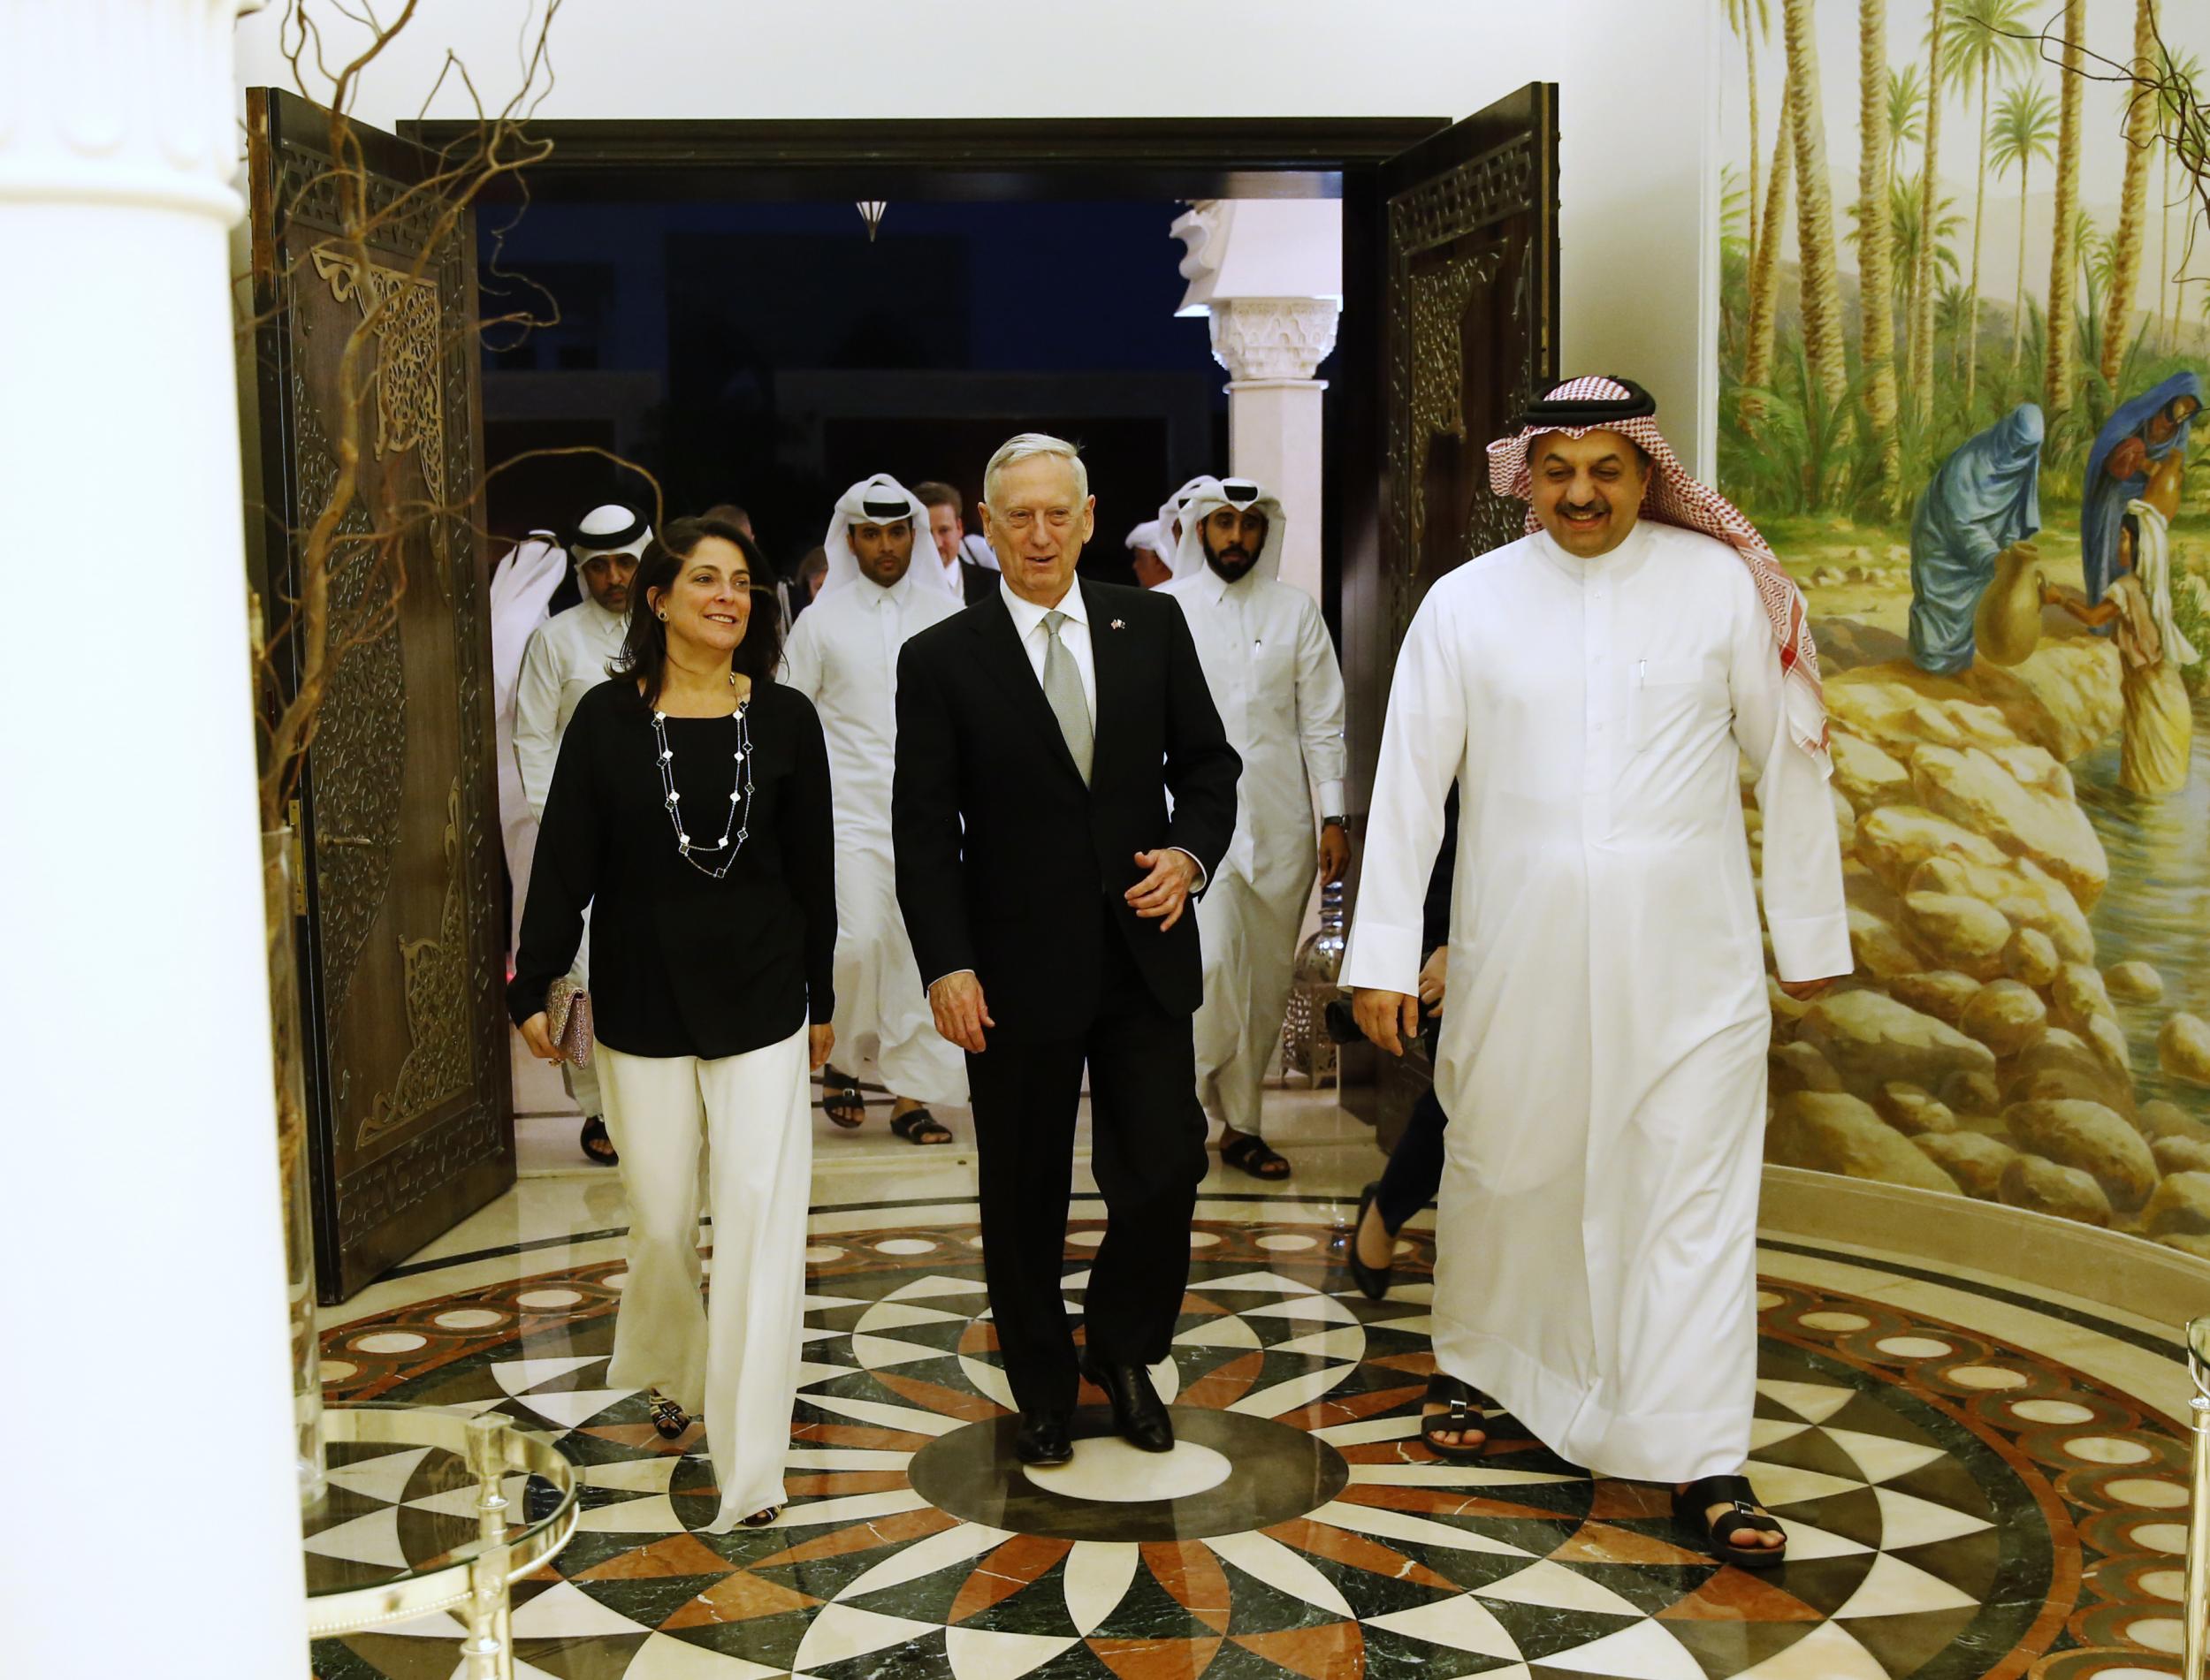 Qatar's Minister of Defence Khalid bin Mohammad Al-Attiyah (R) welcomes US Defence Secretary James Mattis (C) and US Ambassador to Qatar Dana Shell Smith (L) at his residence on April 22, 2017 in Doha, Qatar